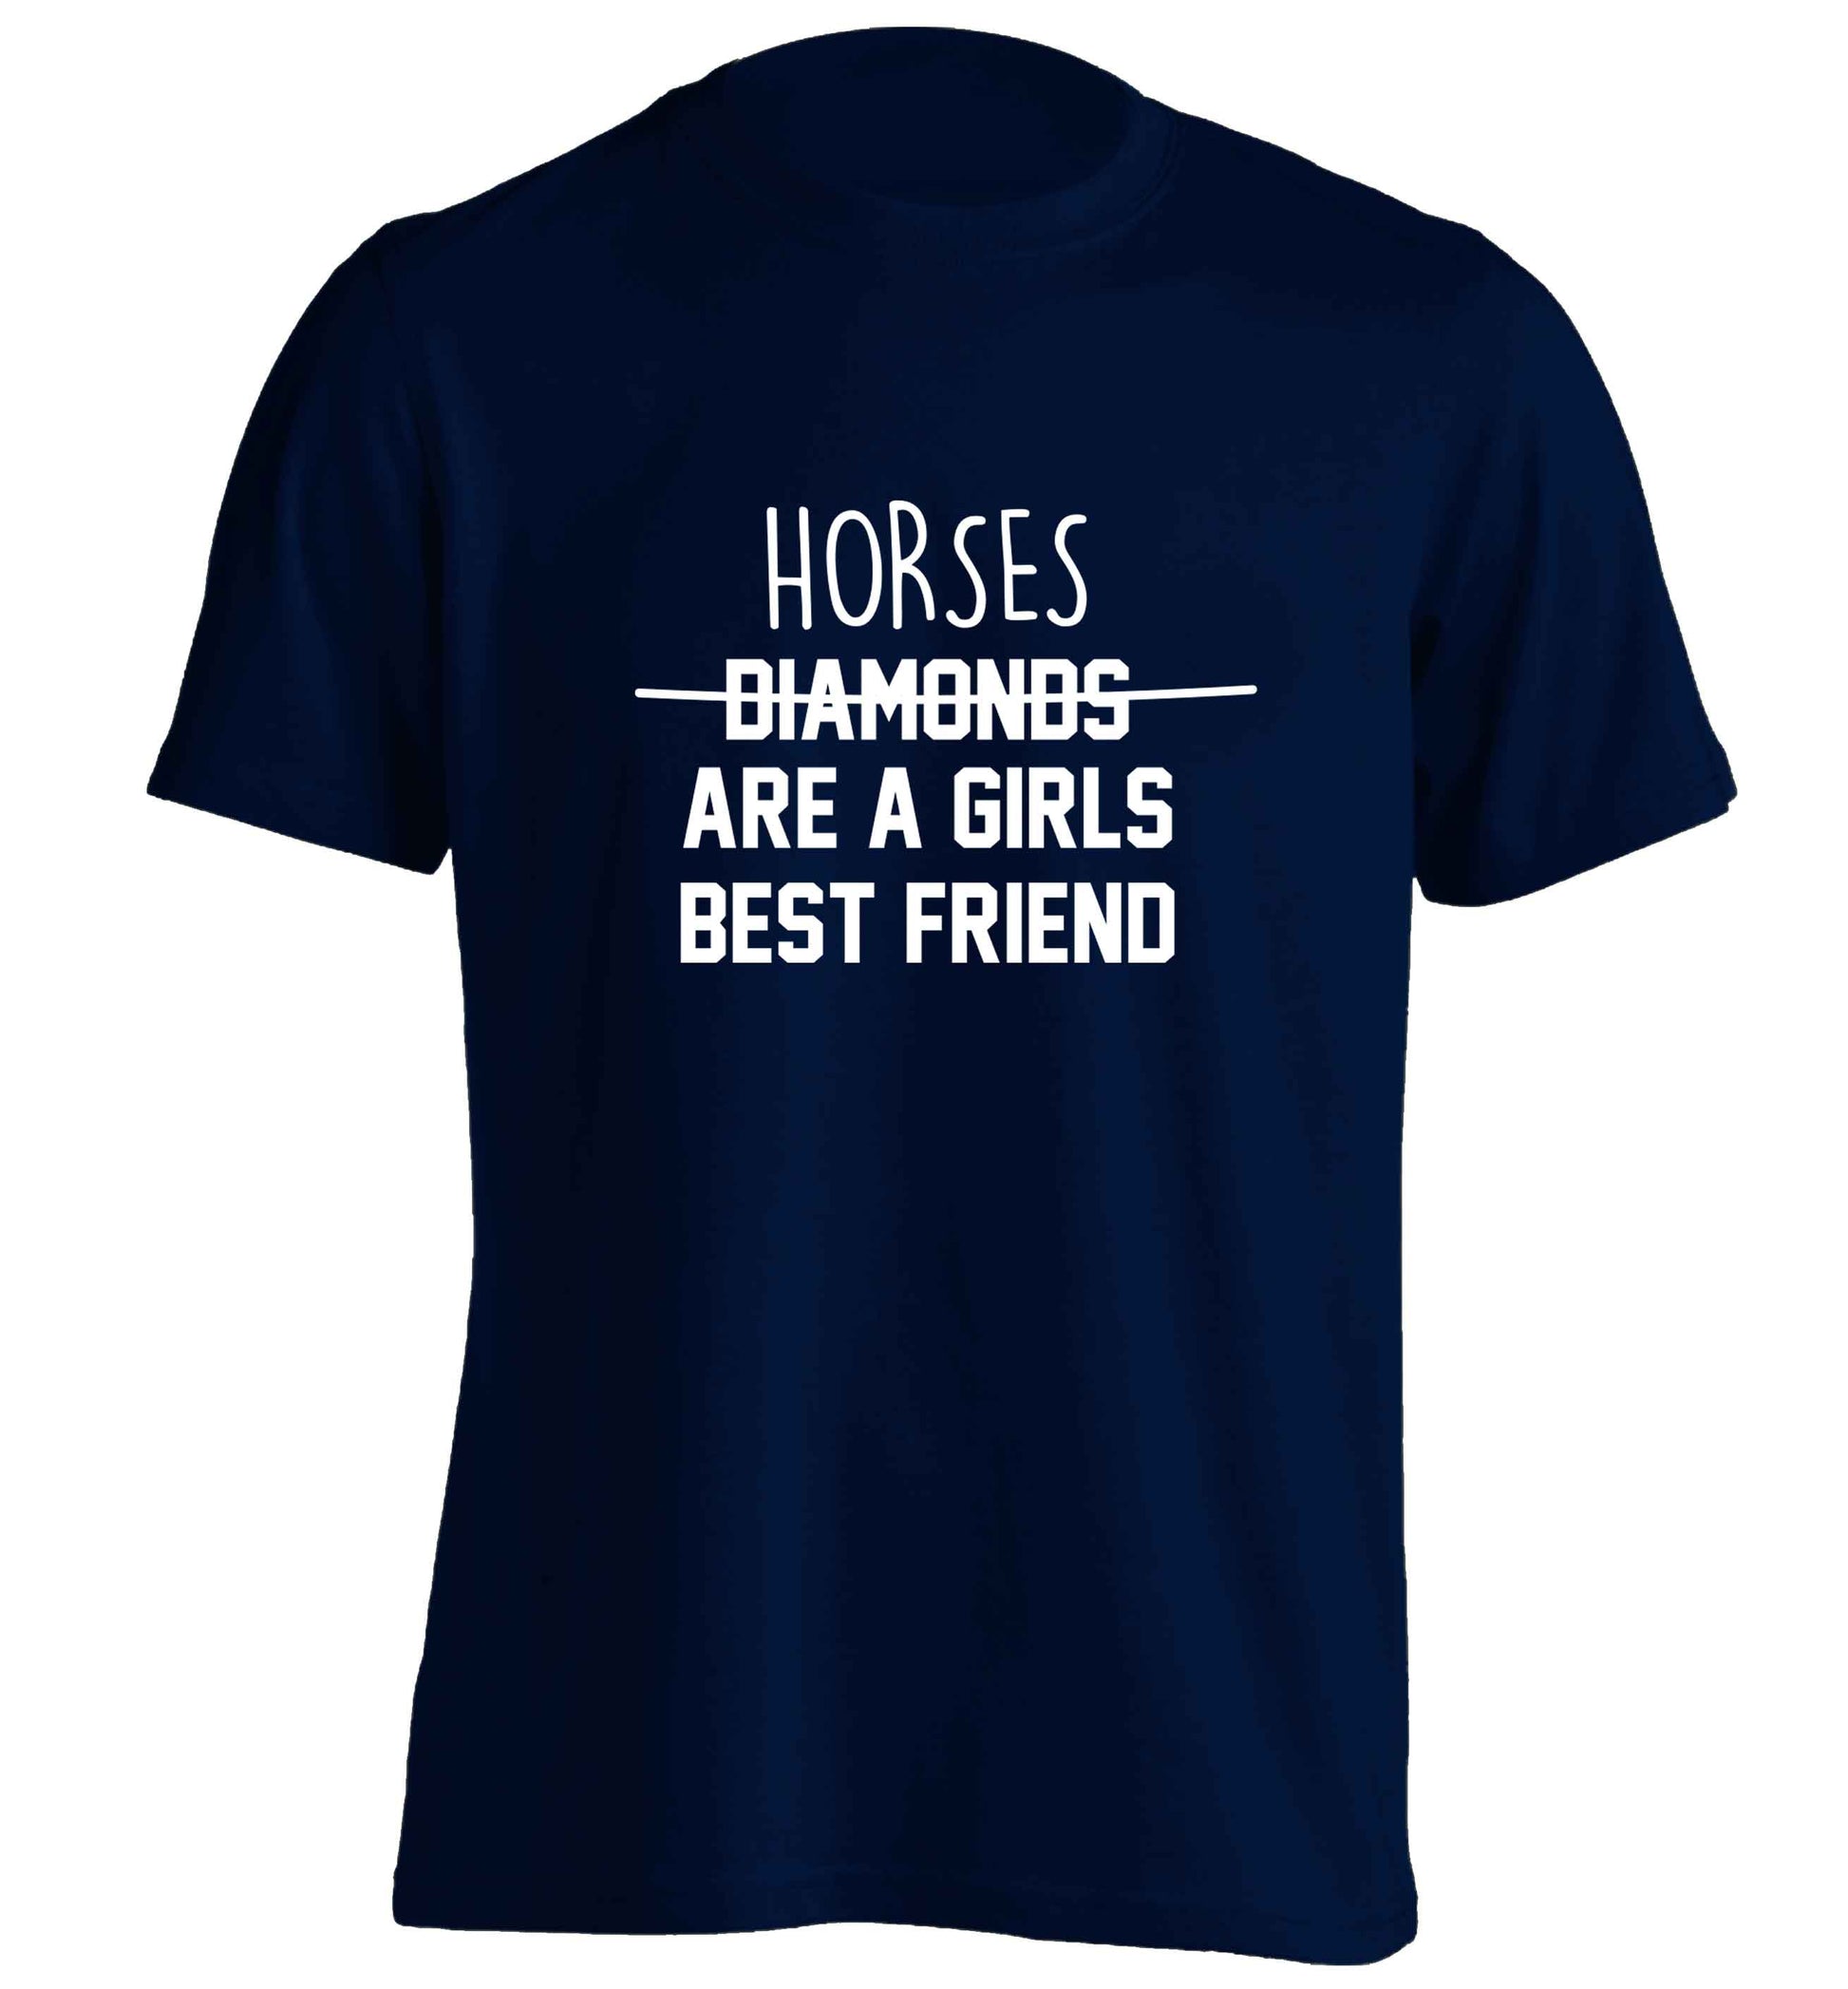 Horses are a girls best friend adults unisex navy Tshirt 2XL